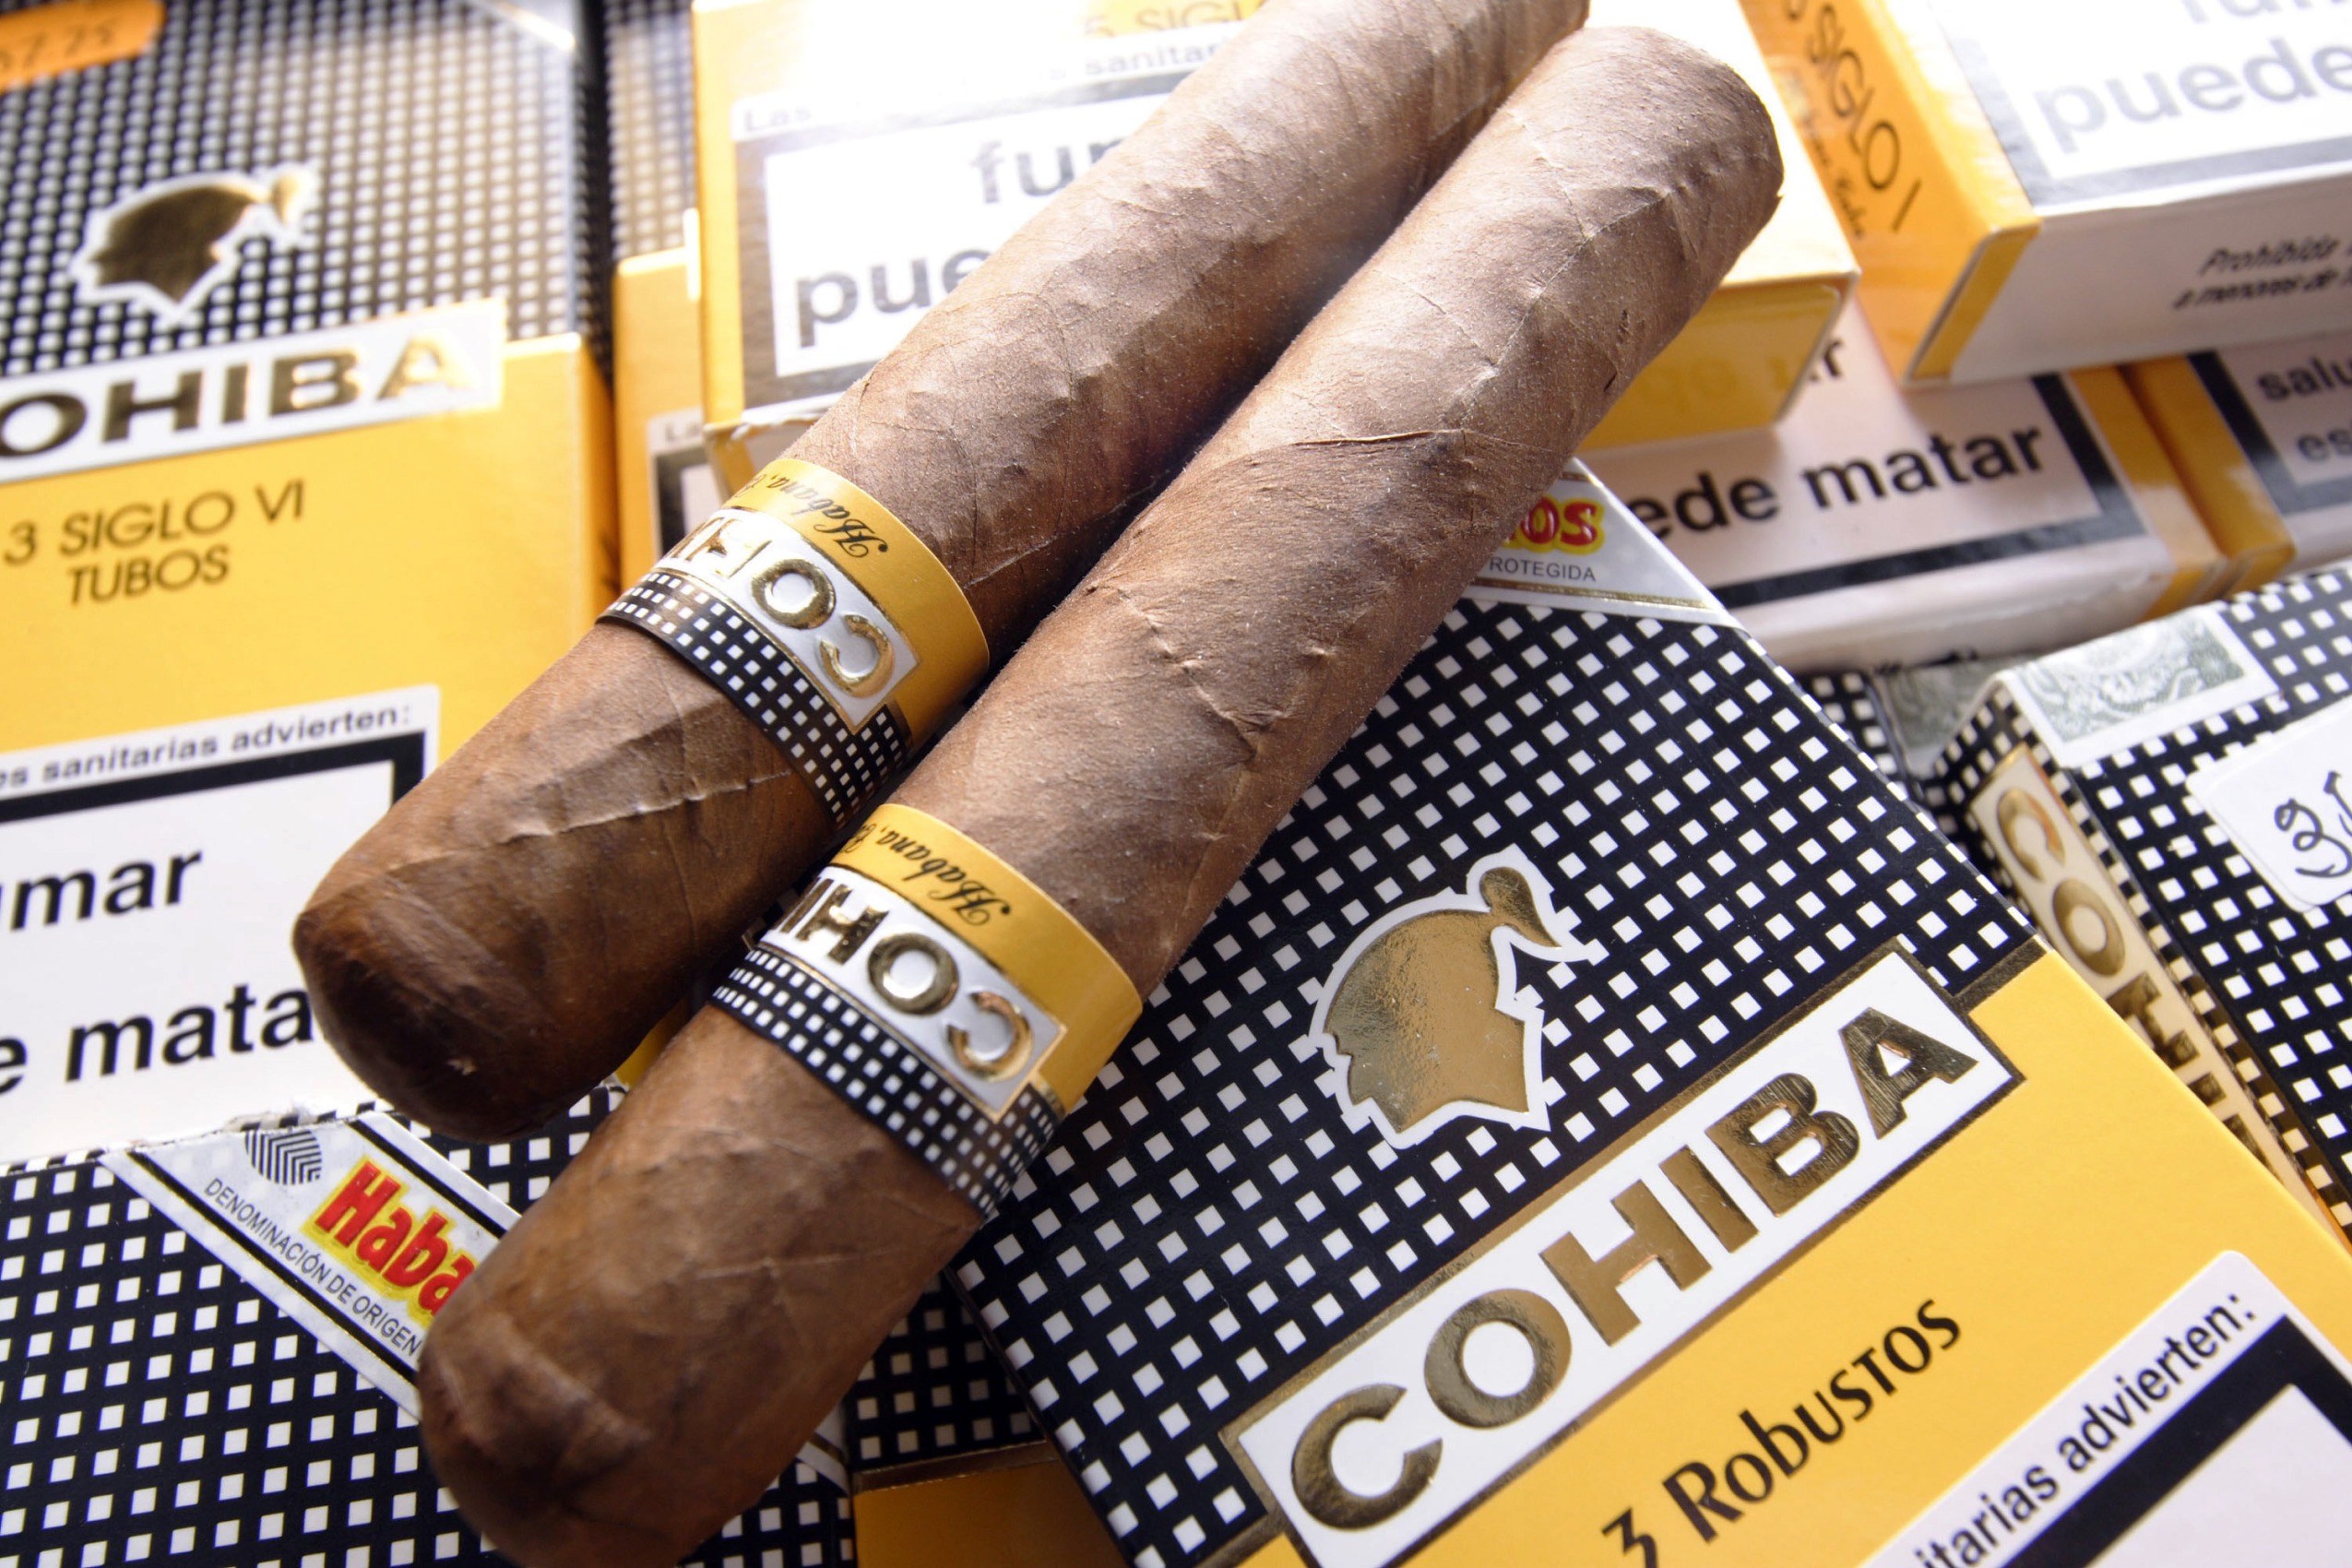 Cohiba Archives - Cigars.Zone Online Magazine